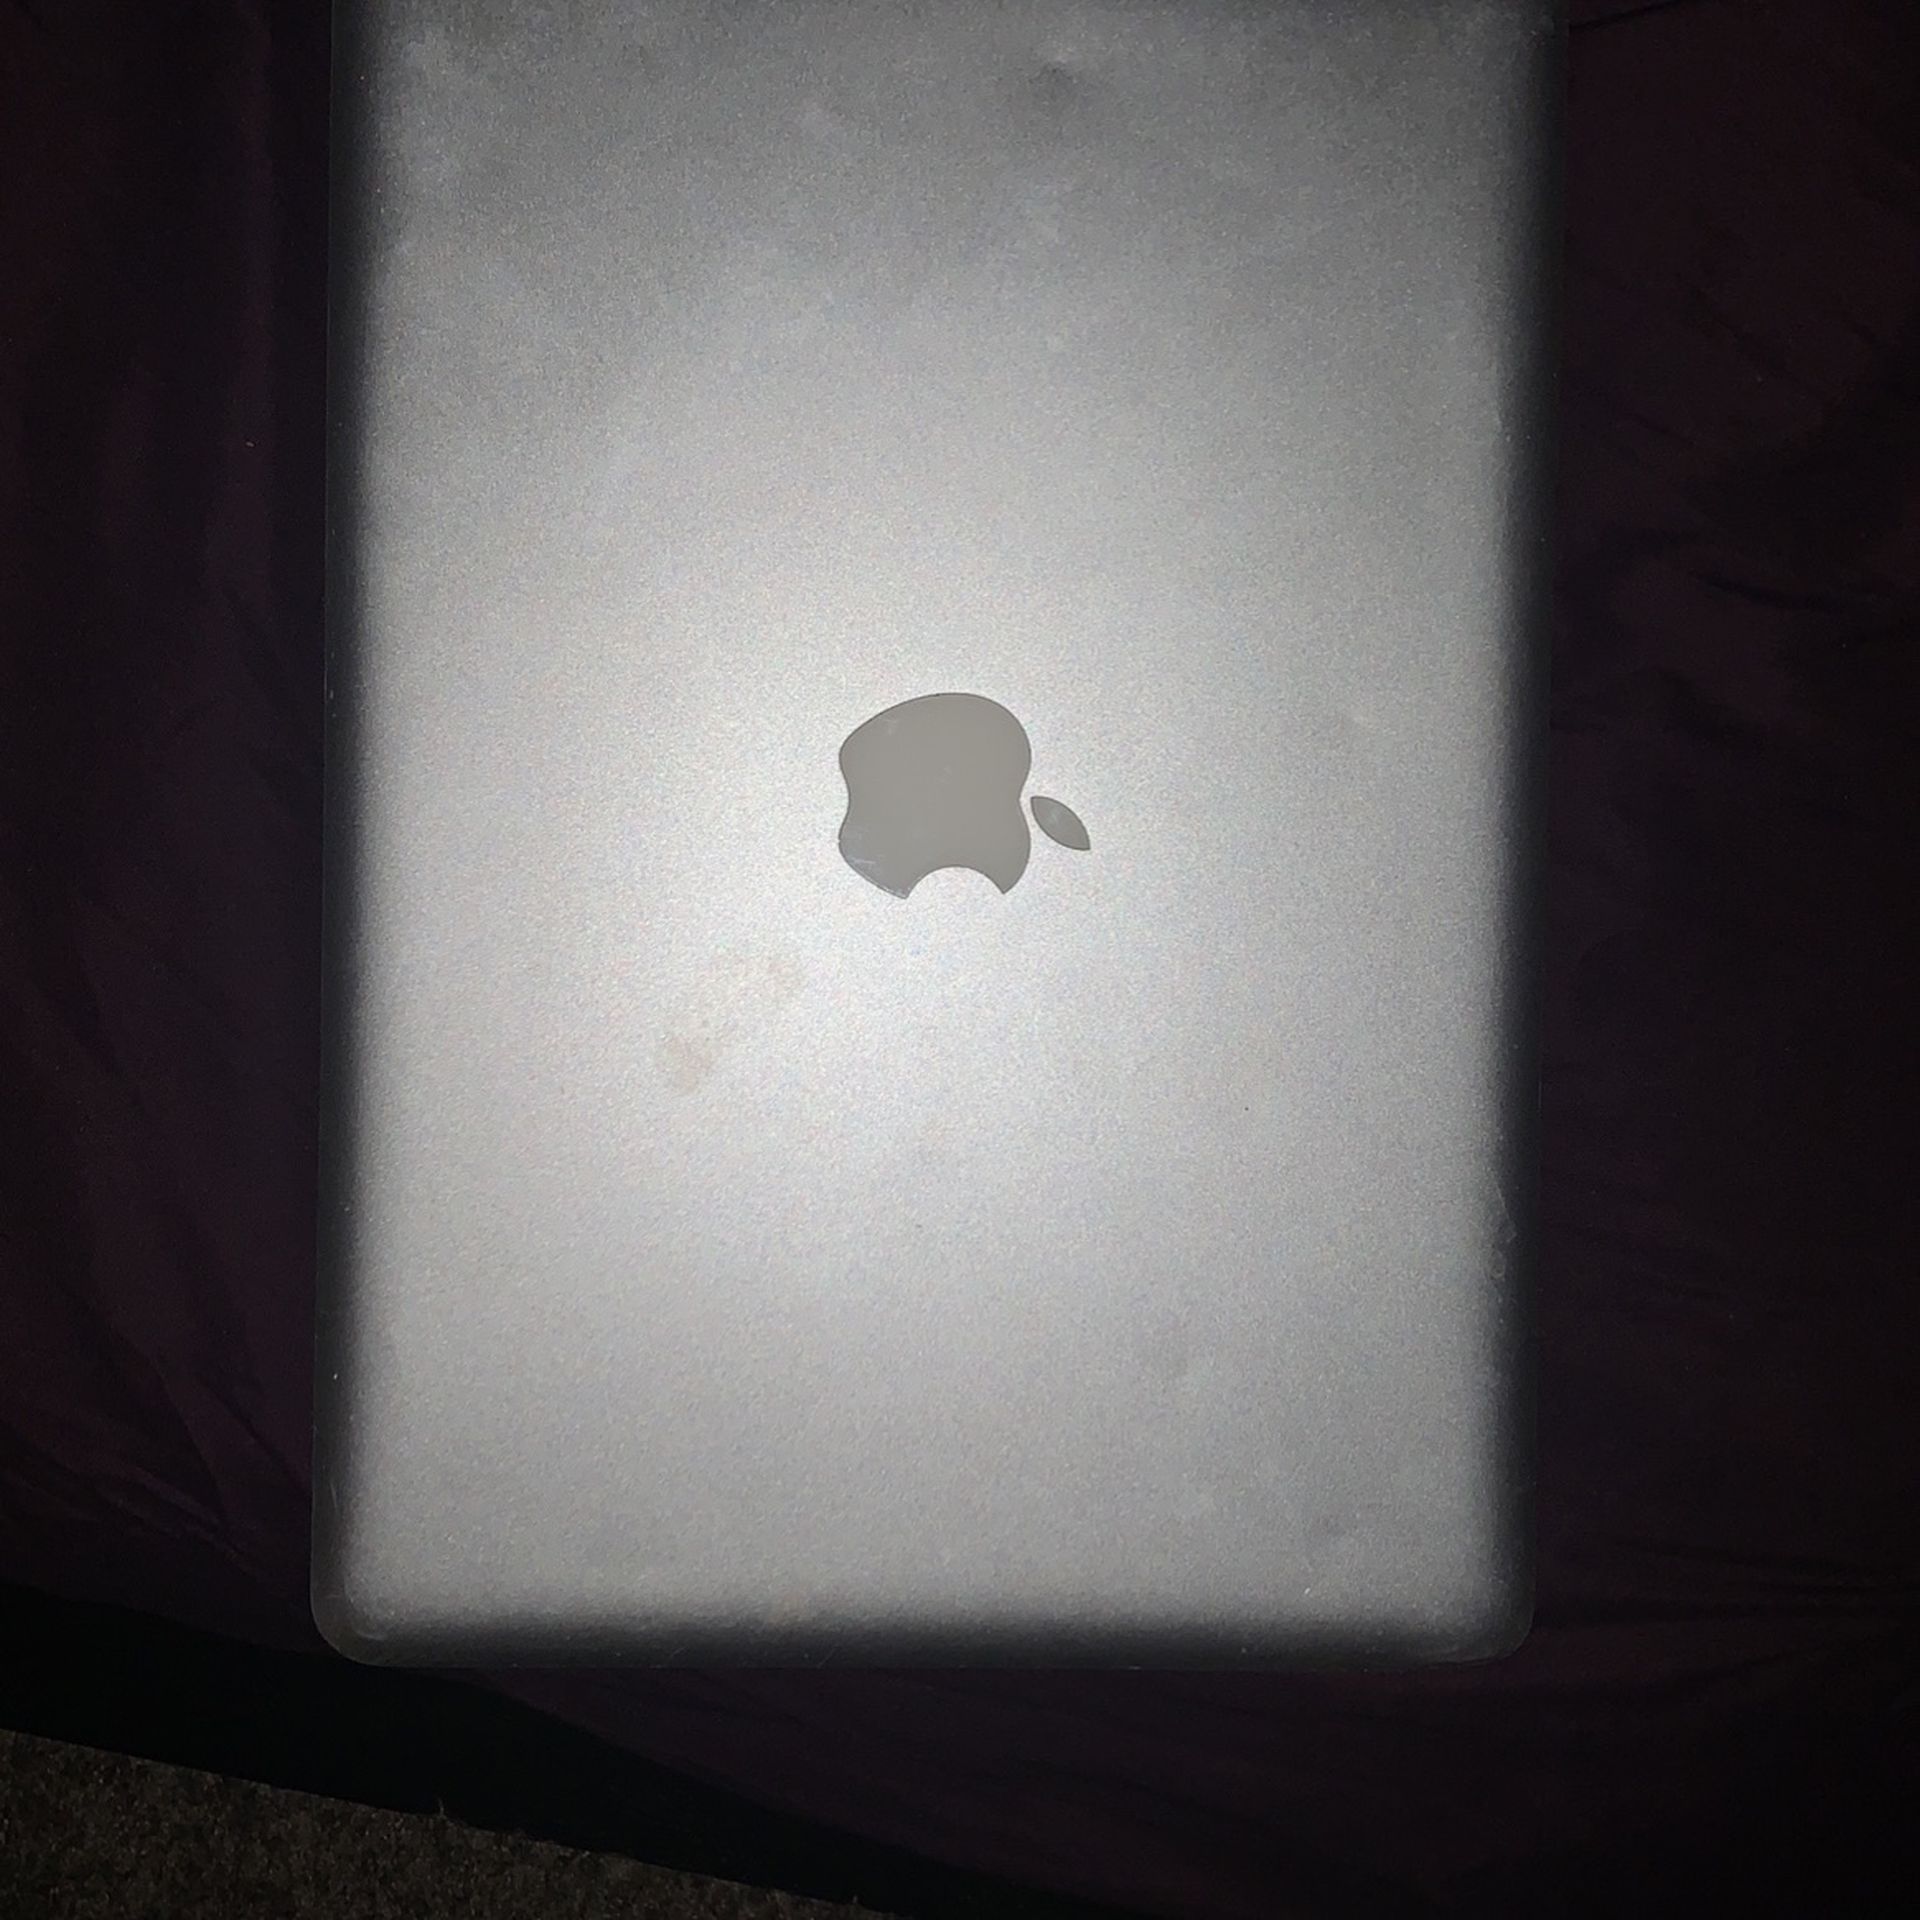 MacBook Early 2011